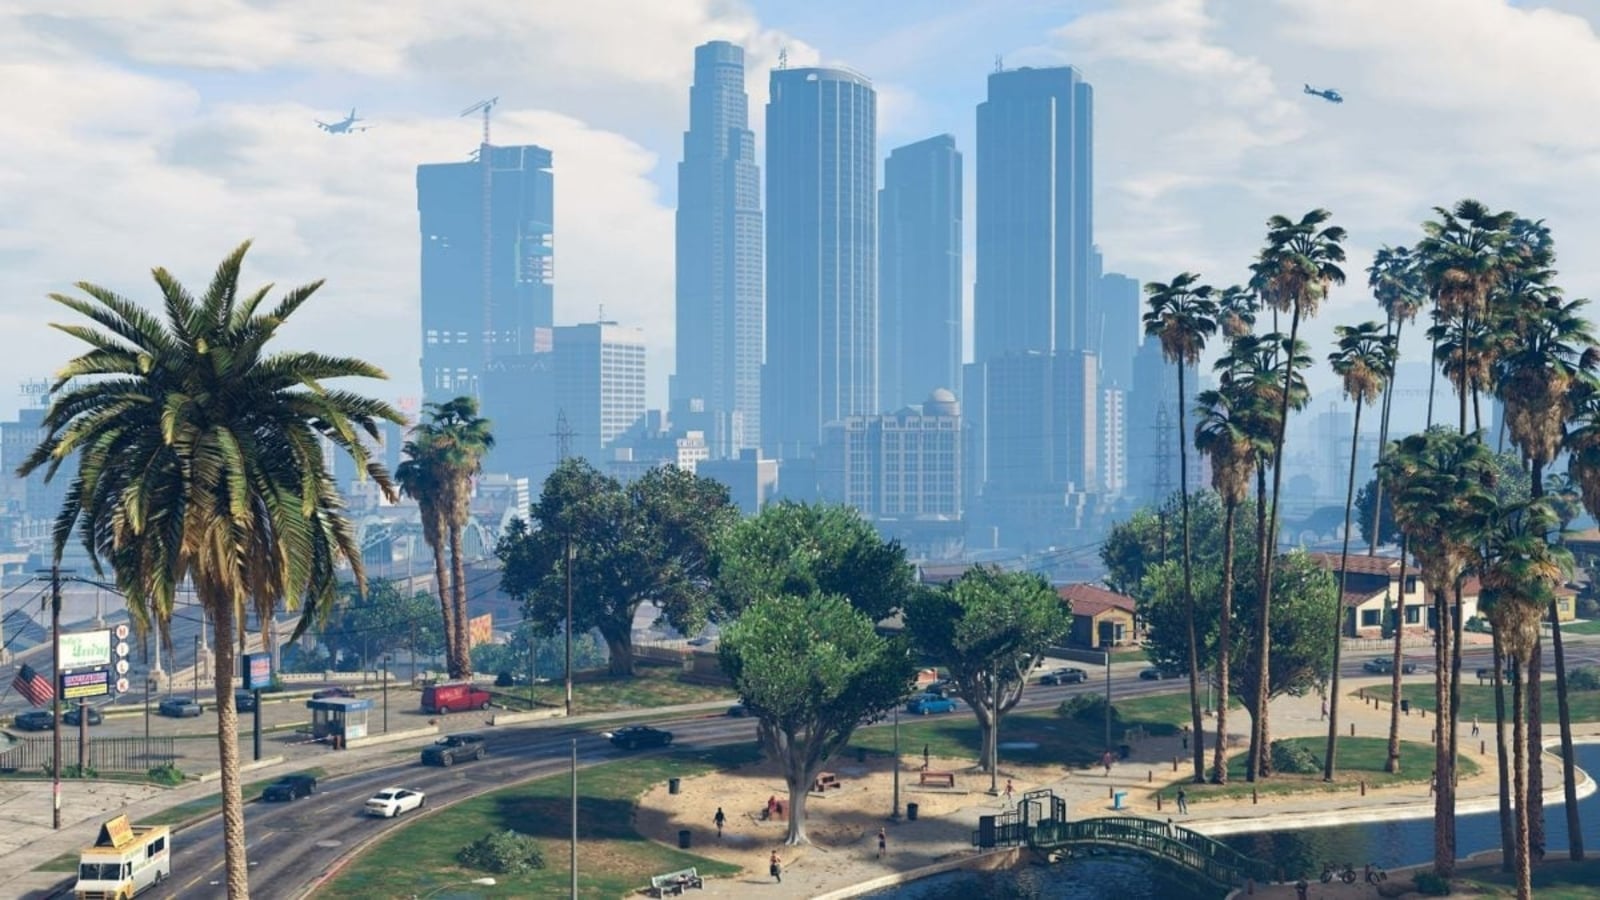 Huge GTA 6 leak includes gameplay footage of robbery, Vice City